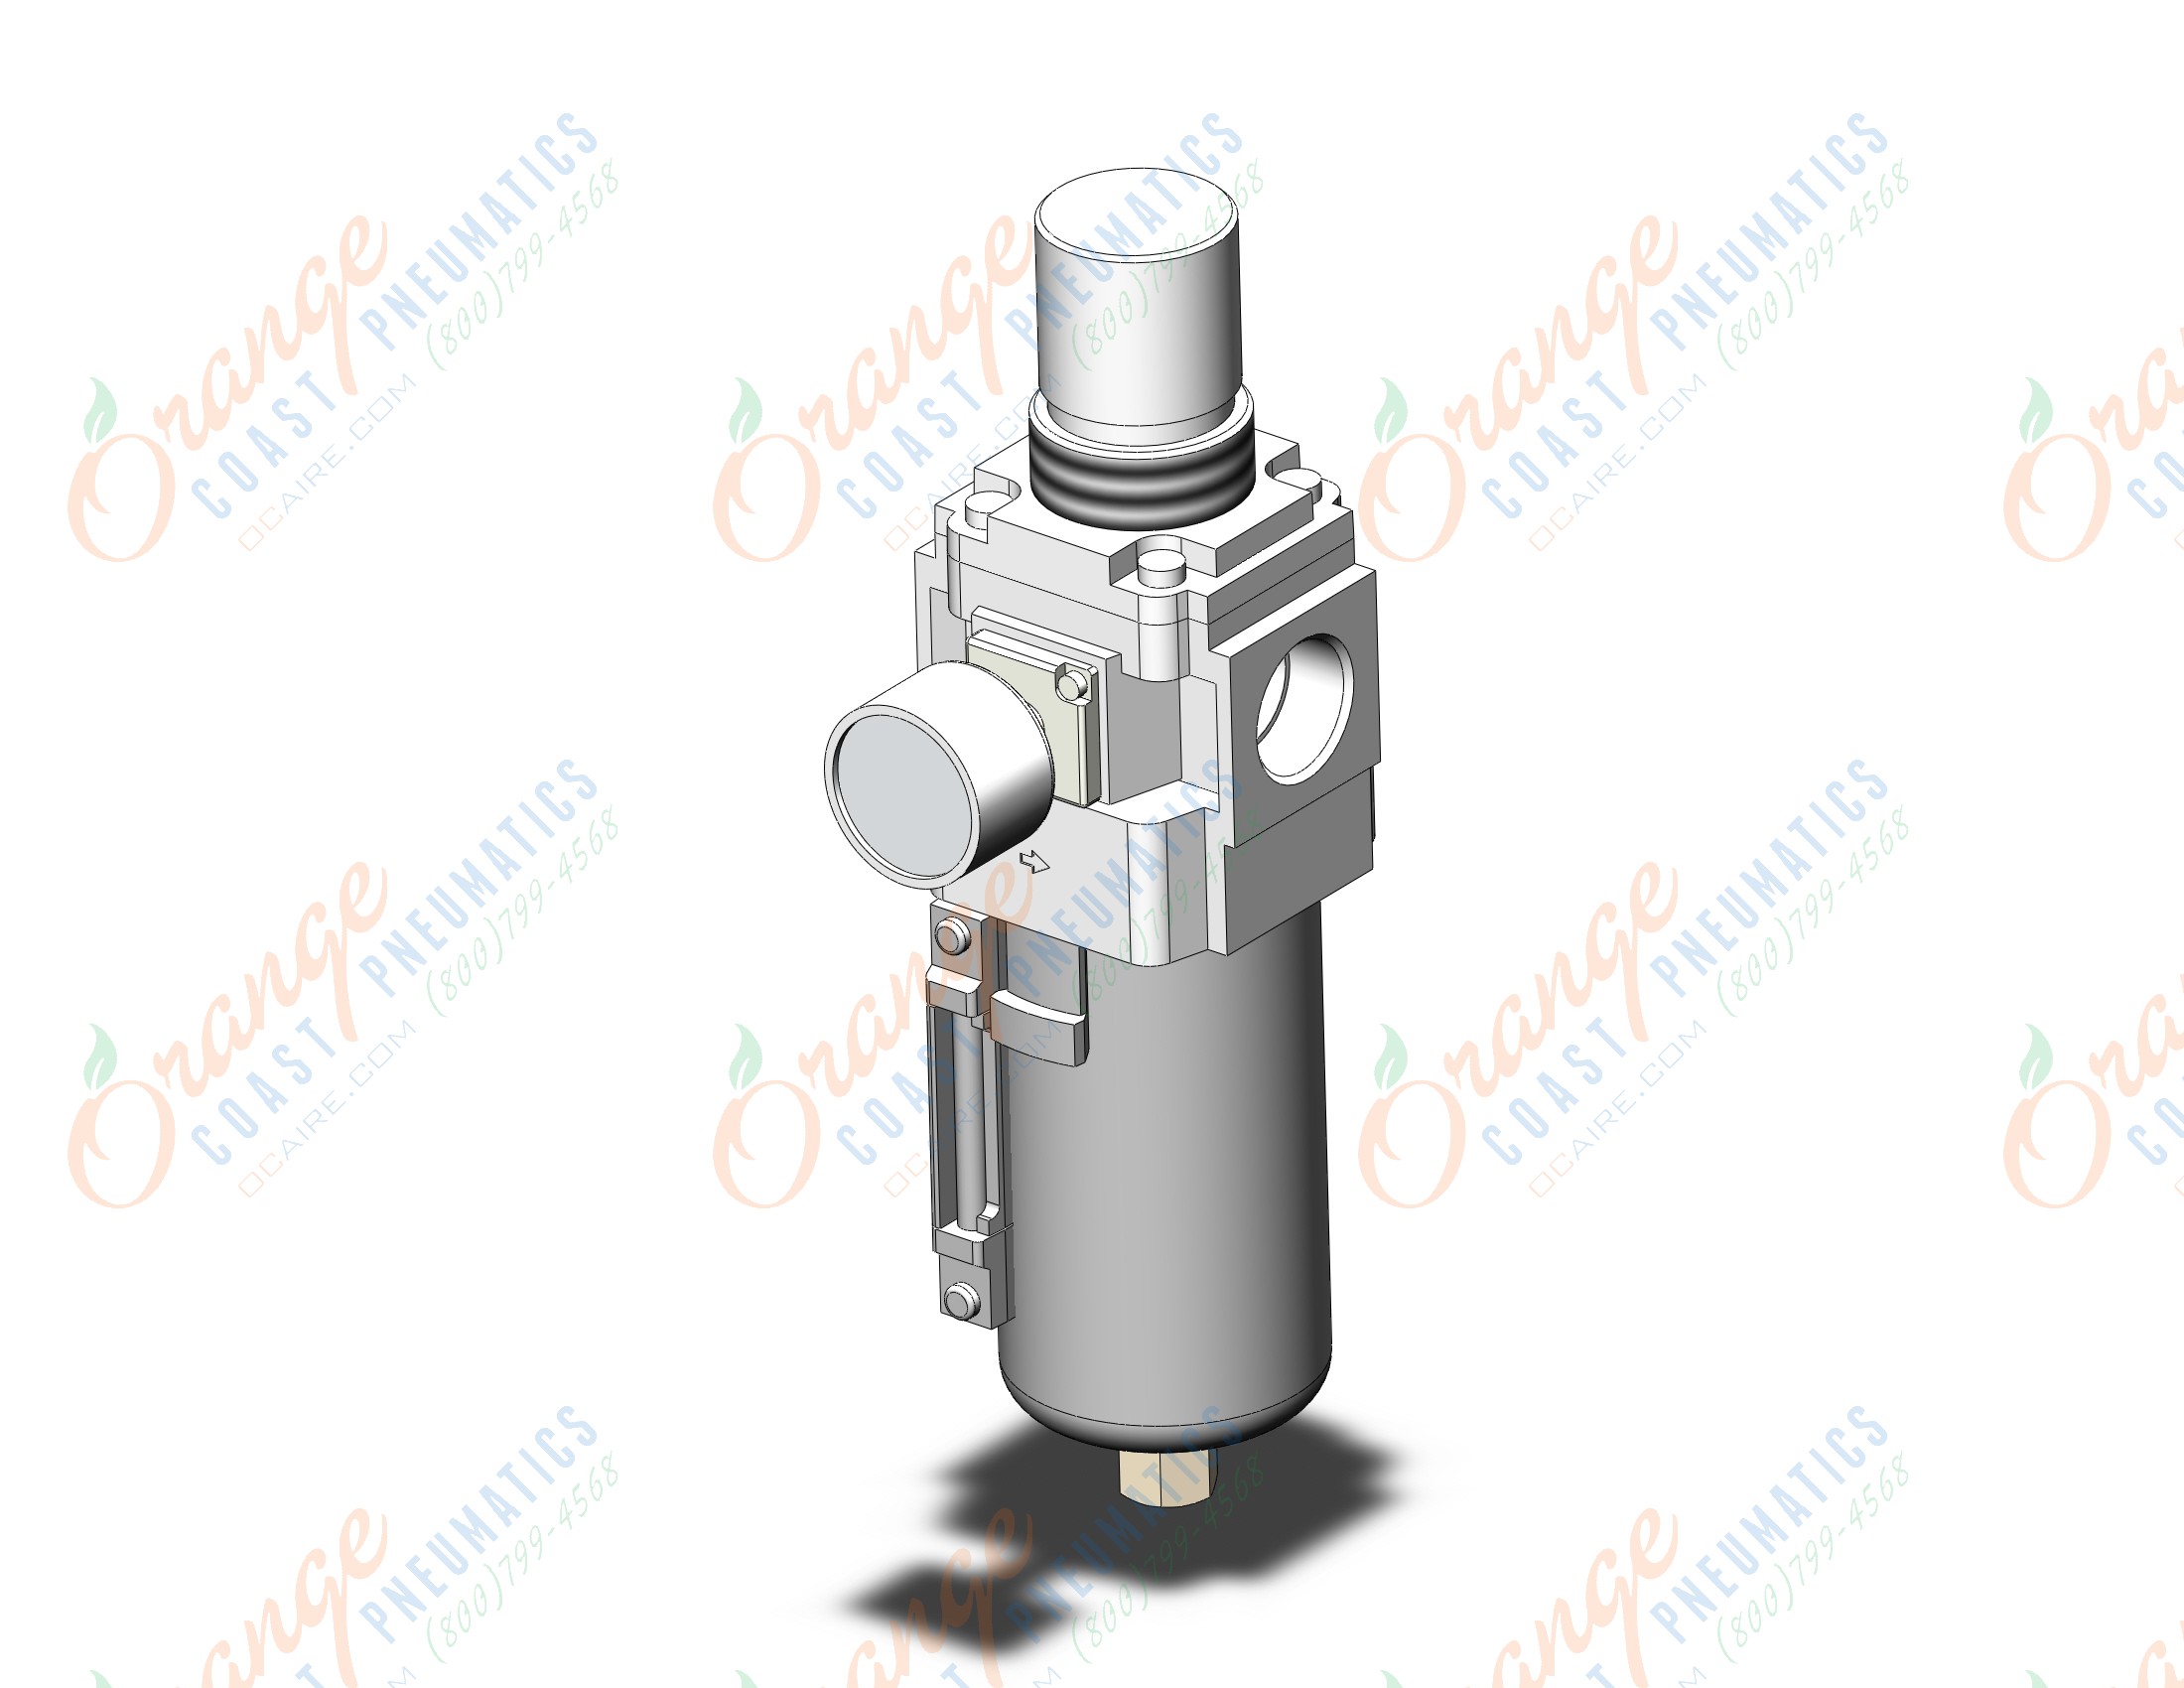 SMC AW40K-N06G-8JZ-B filter/regulator, FILTER/REGULATOR, MODULAR F.R.L.